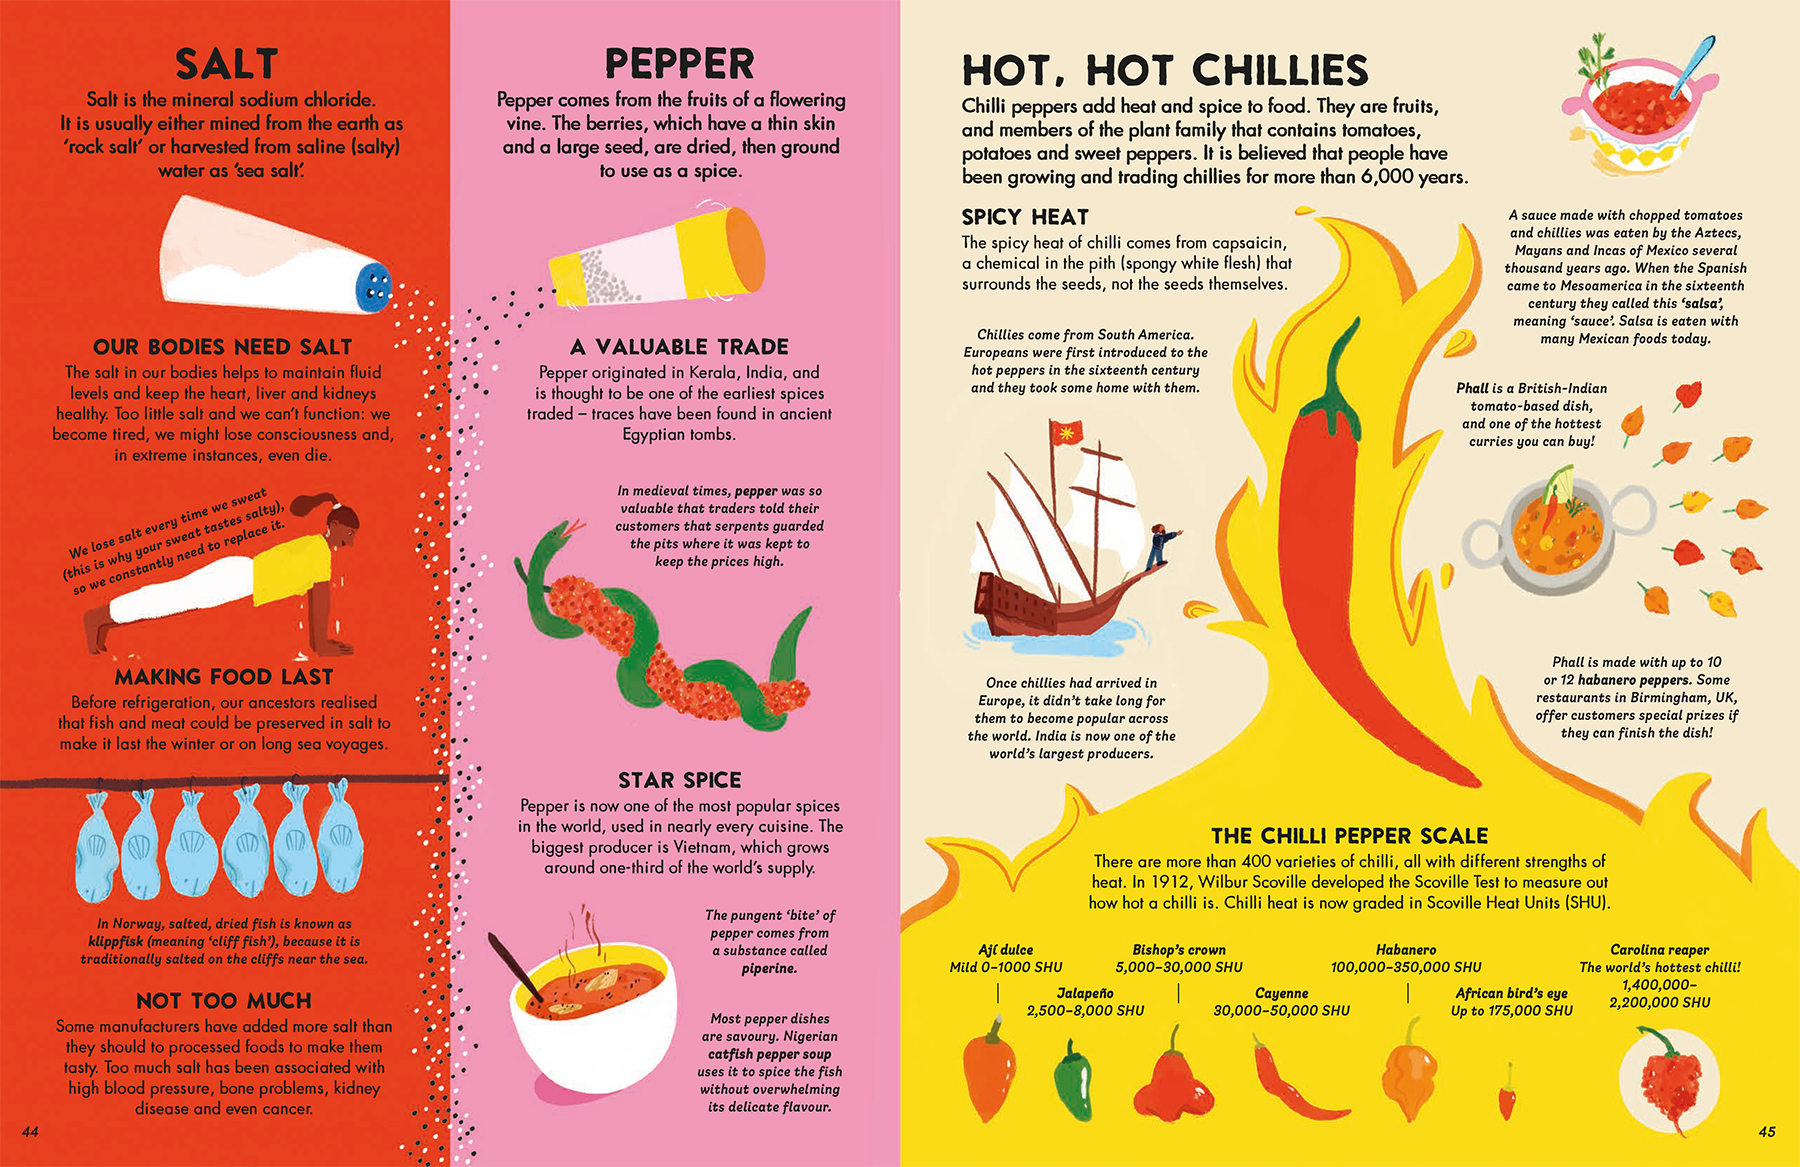 world-of-food-non-fiction-book-illustration-salt-pepper-chilies-phall-klippfisk-piperine-salsa-violeta-noy